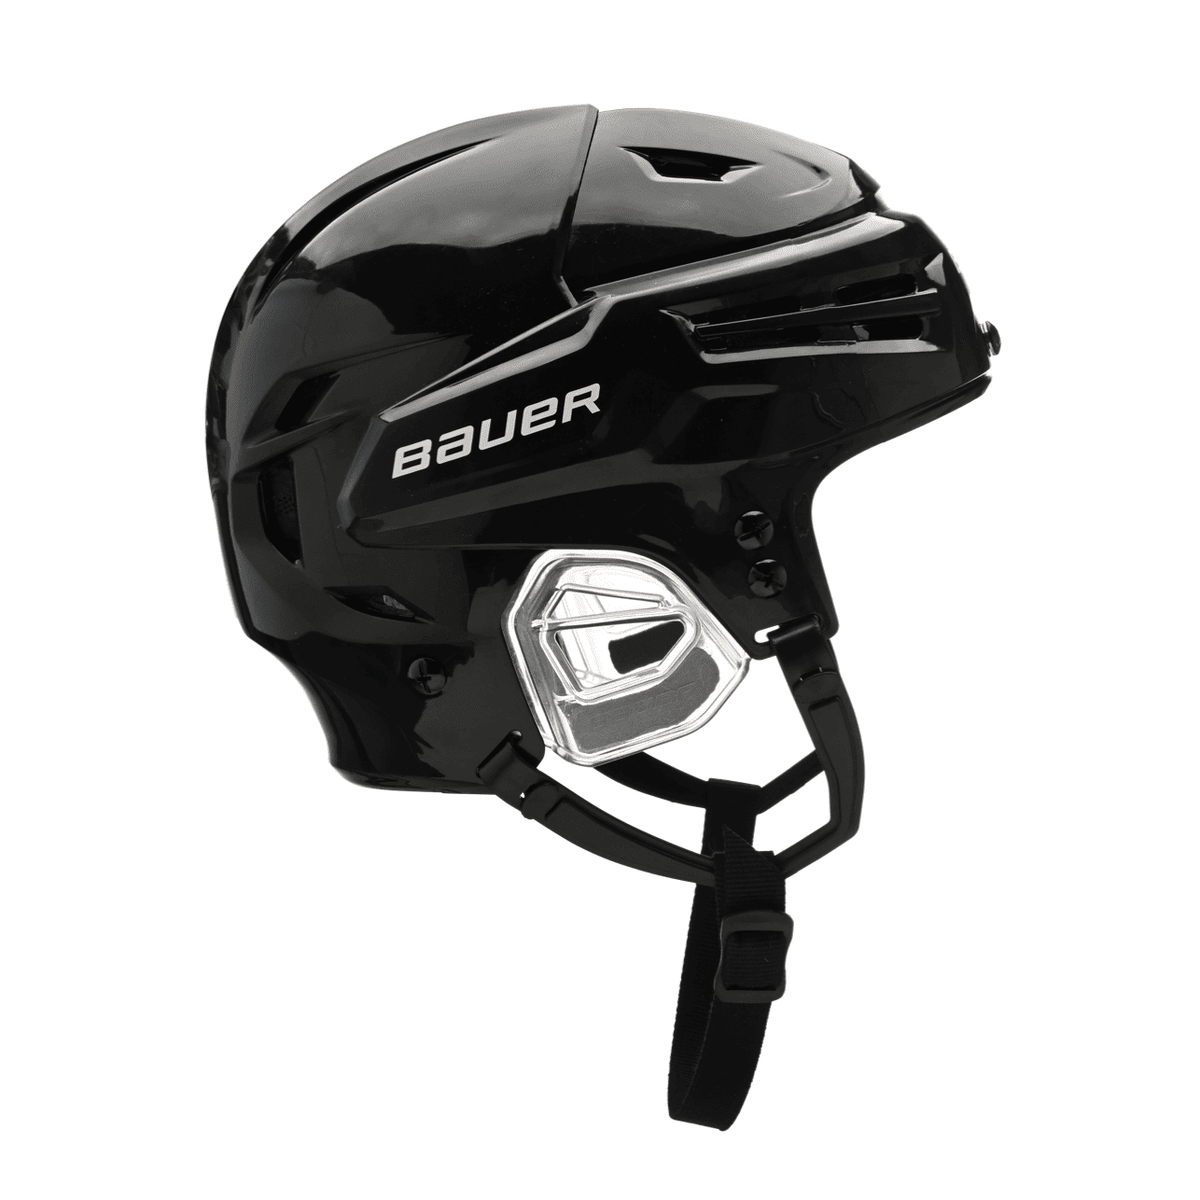 Bauer Re-Akt 65 Hockey Helmet with Cage